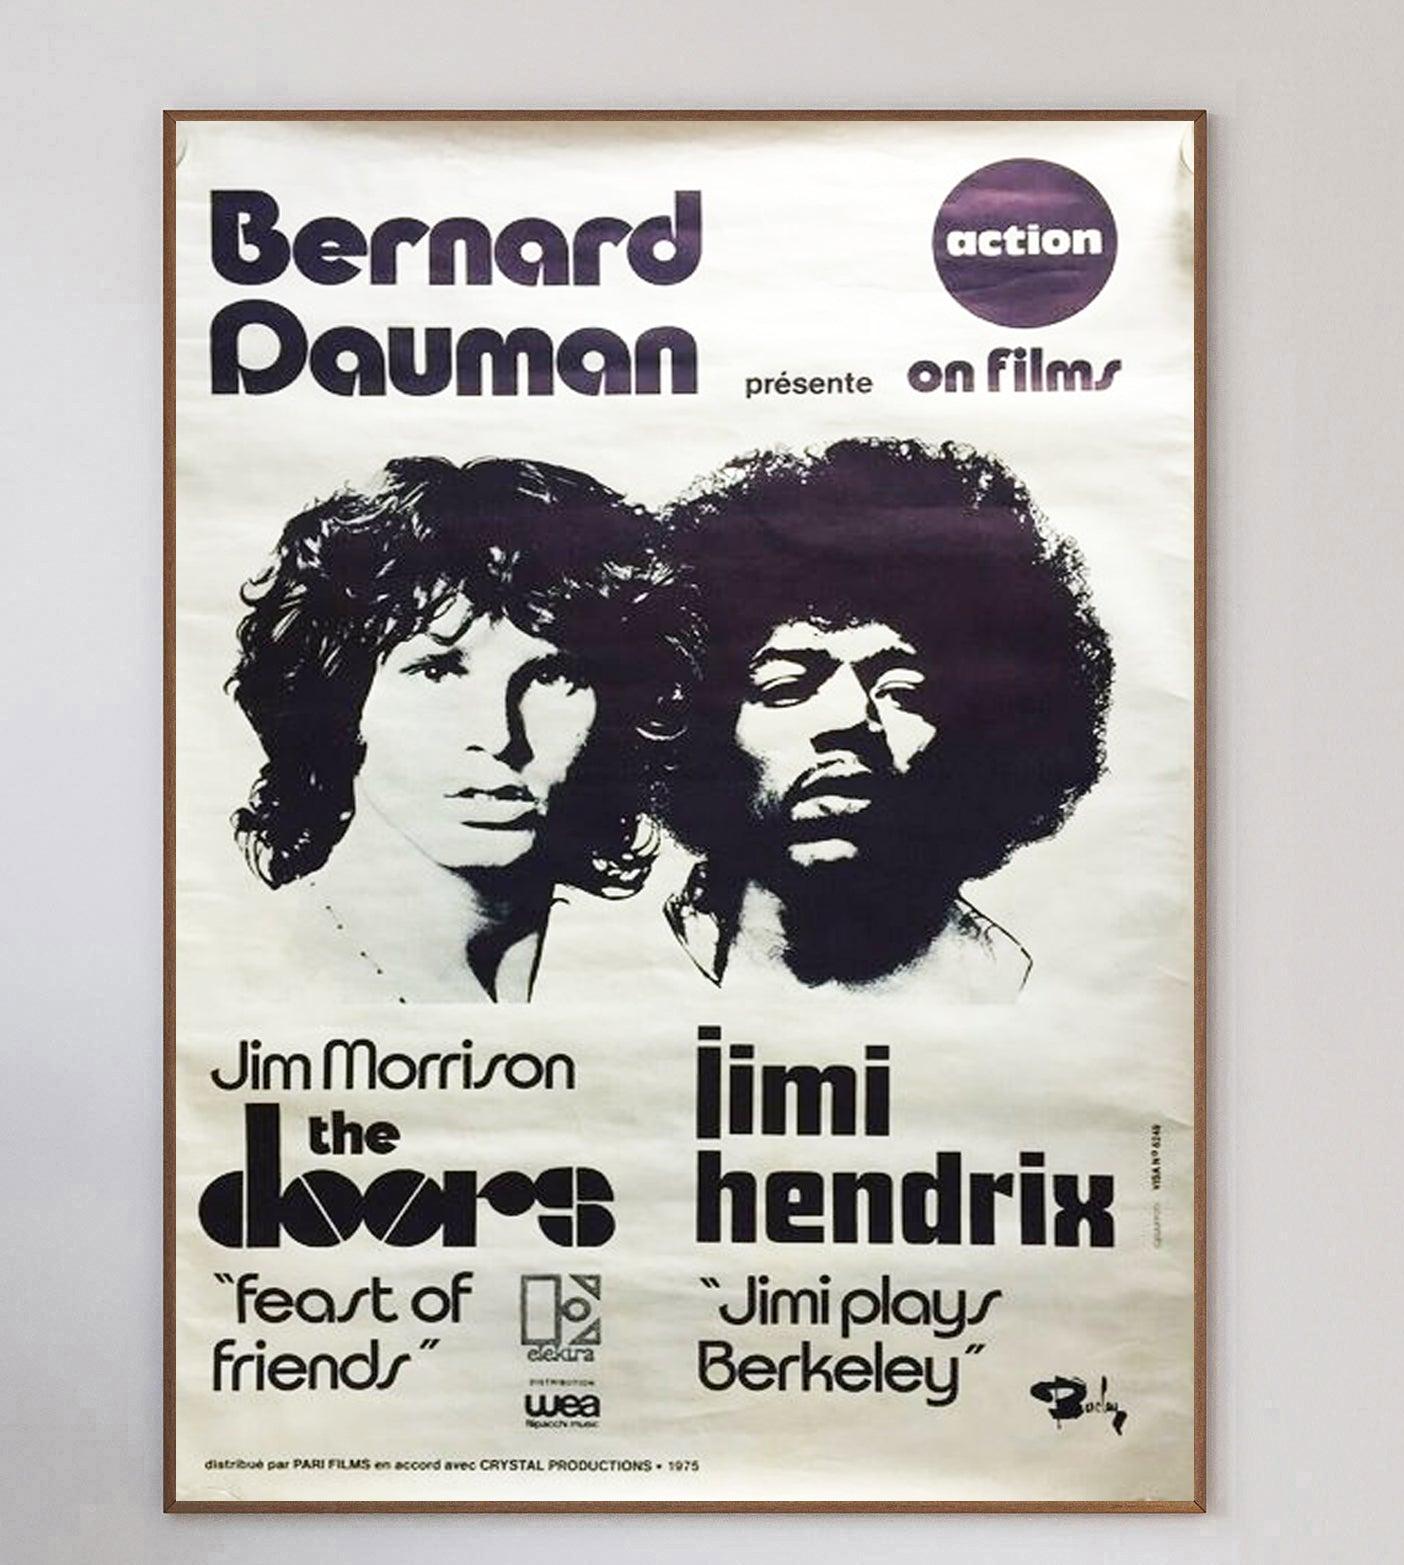 An amazing poster, advertising a double-bill of producer Bernard Dauman's documentary films of Jim Morrison & The Doors 